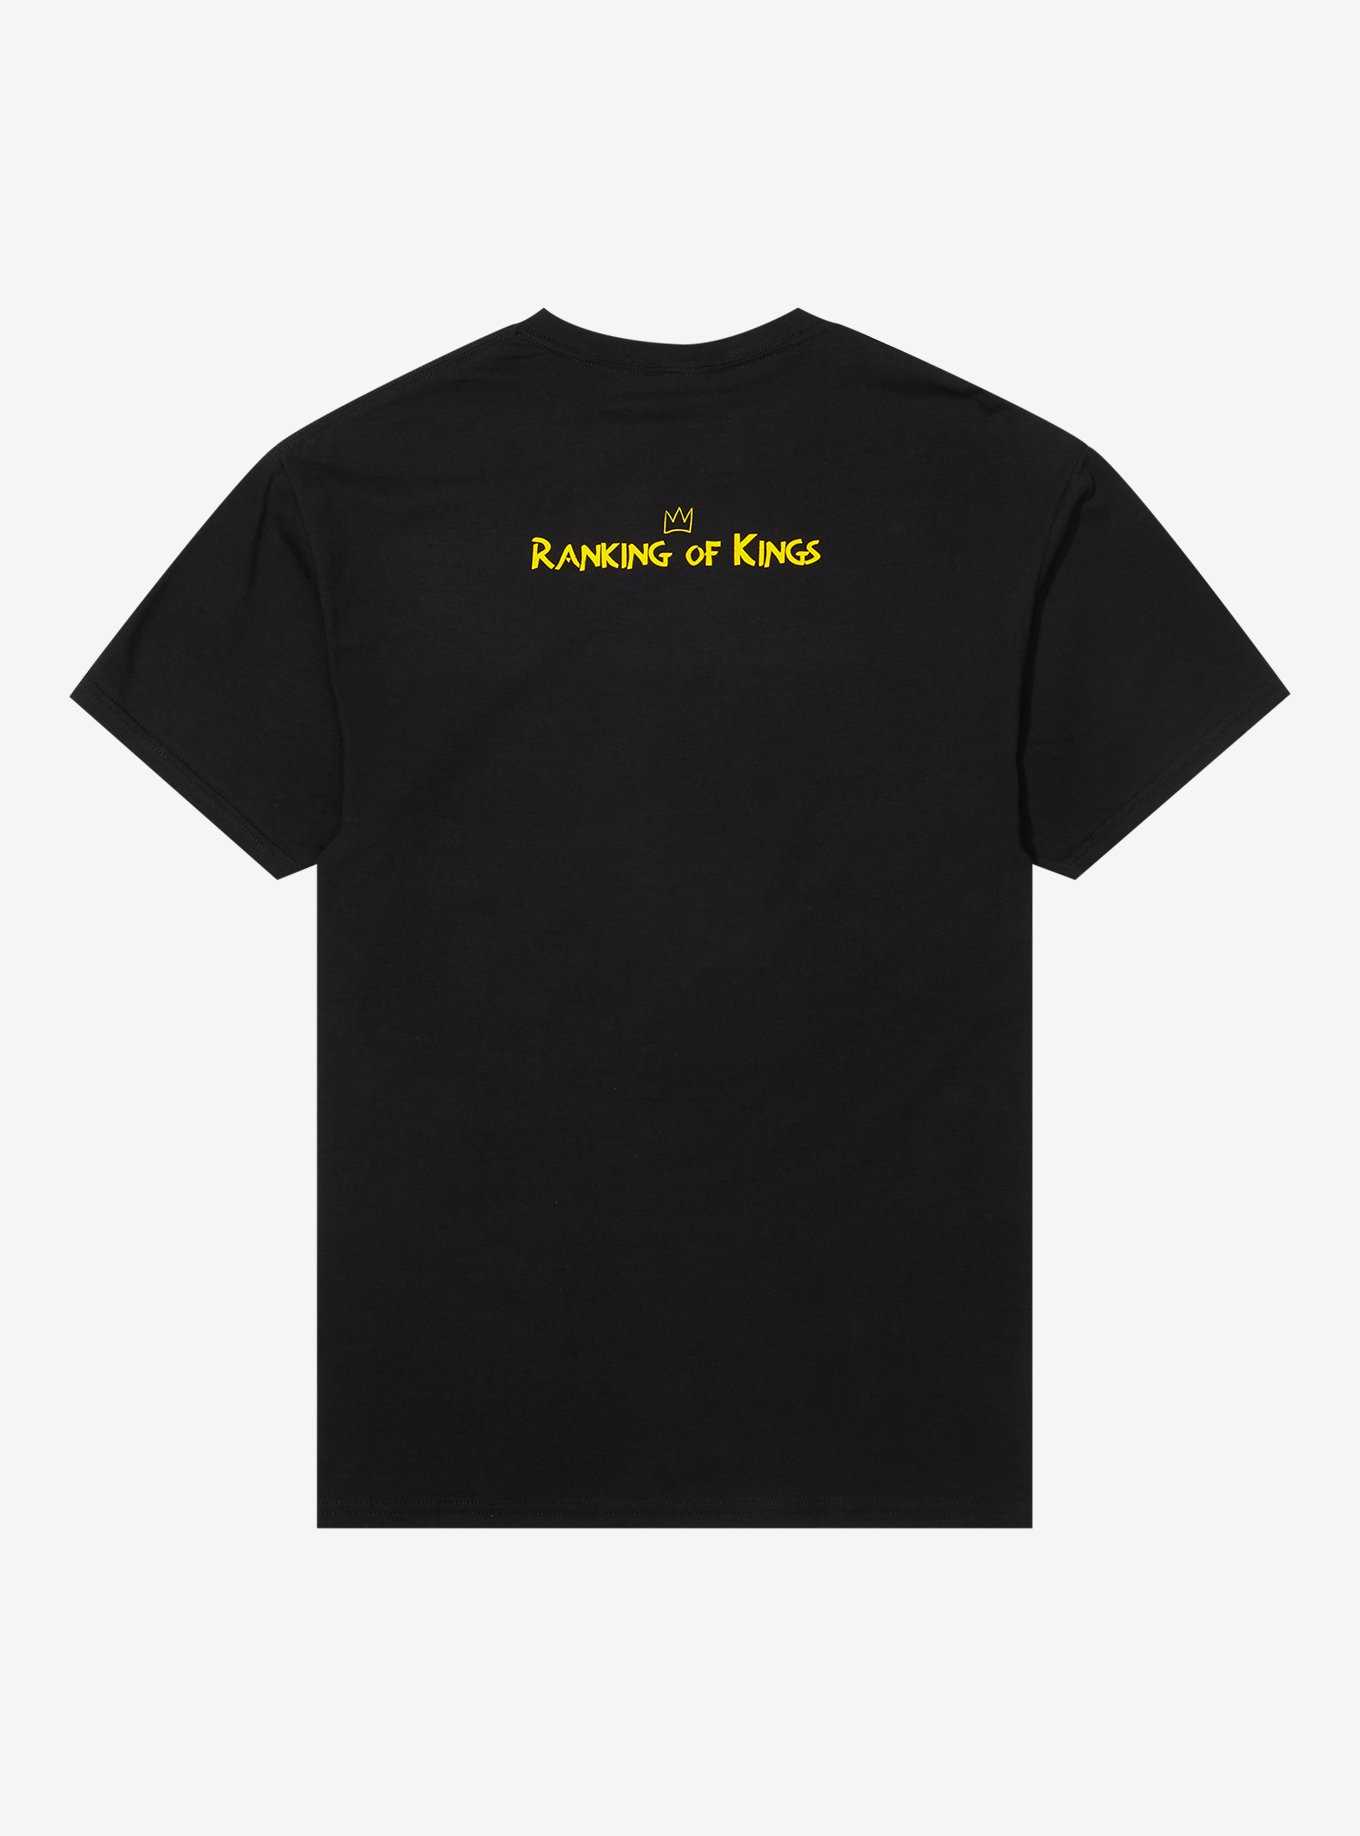 Ranking Of Kings Bojji & Kage T-Shirt, , hi-res